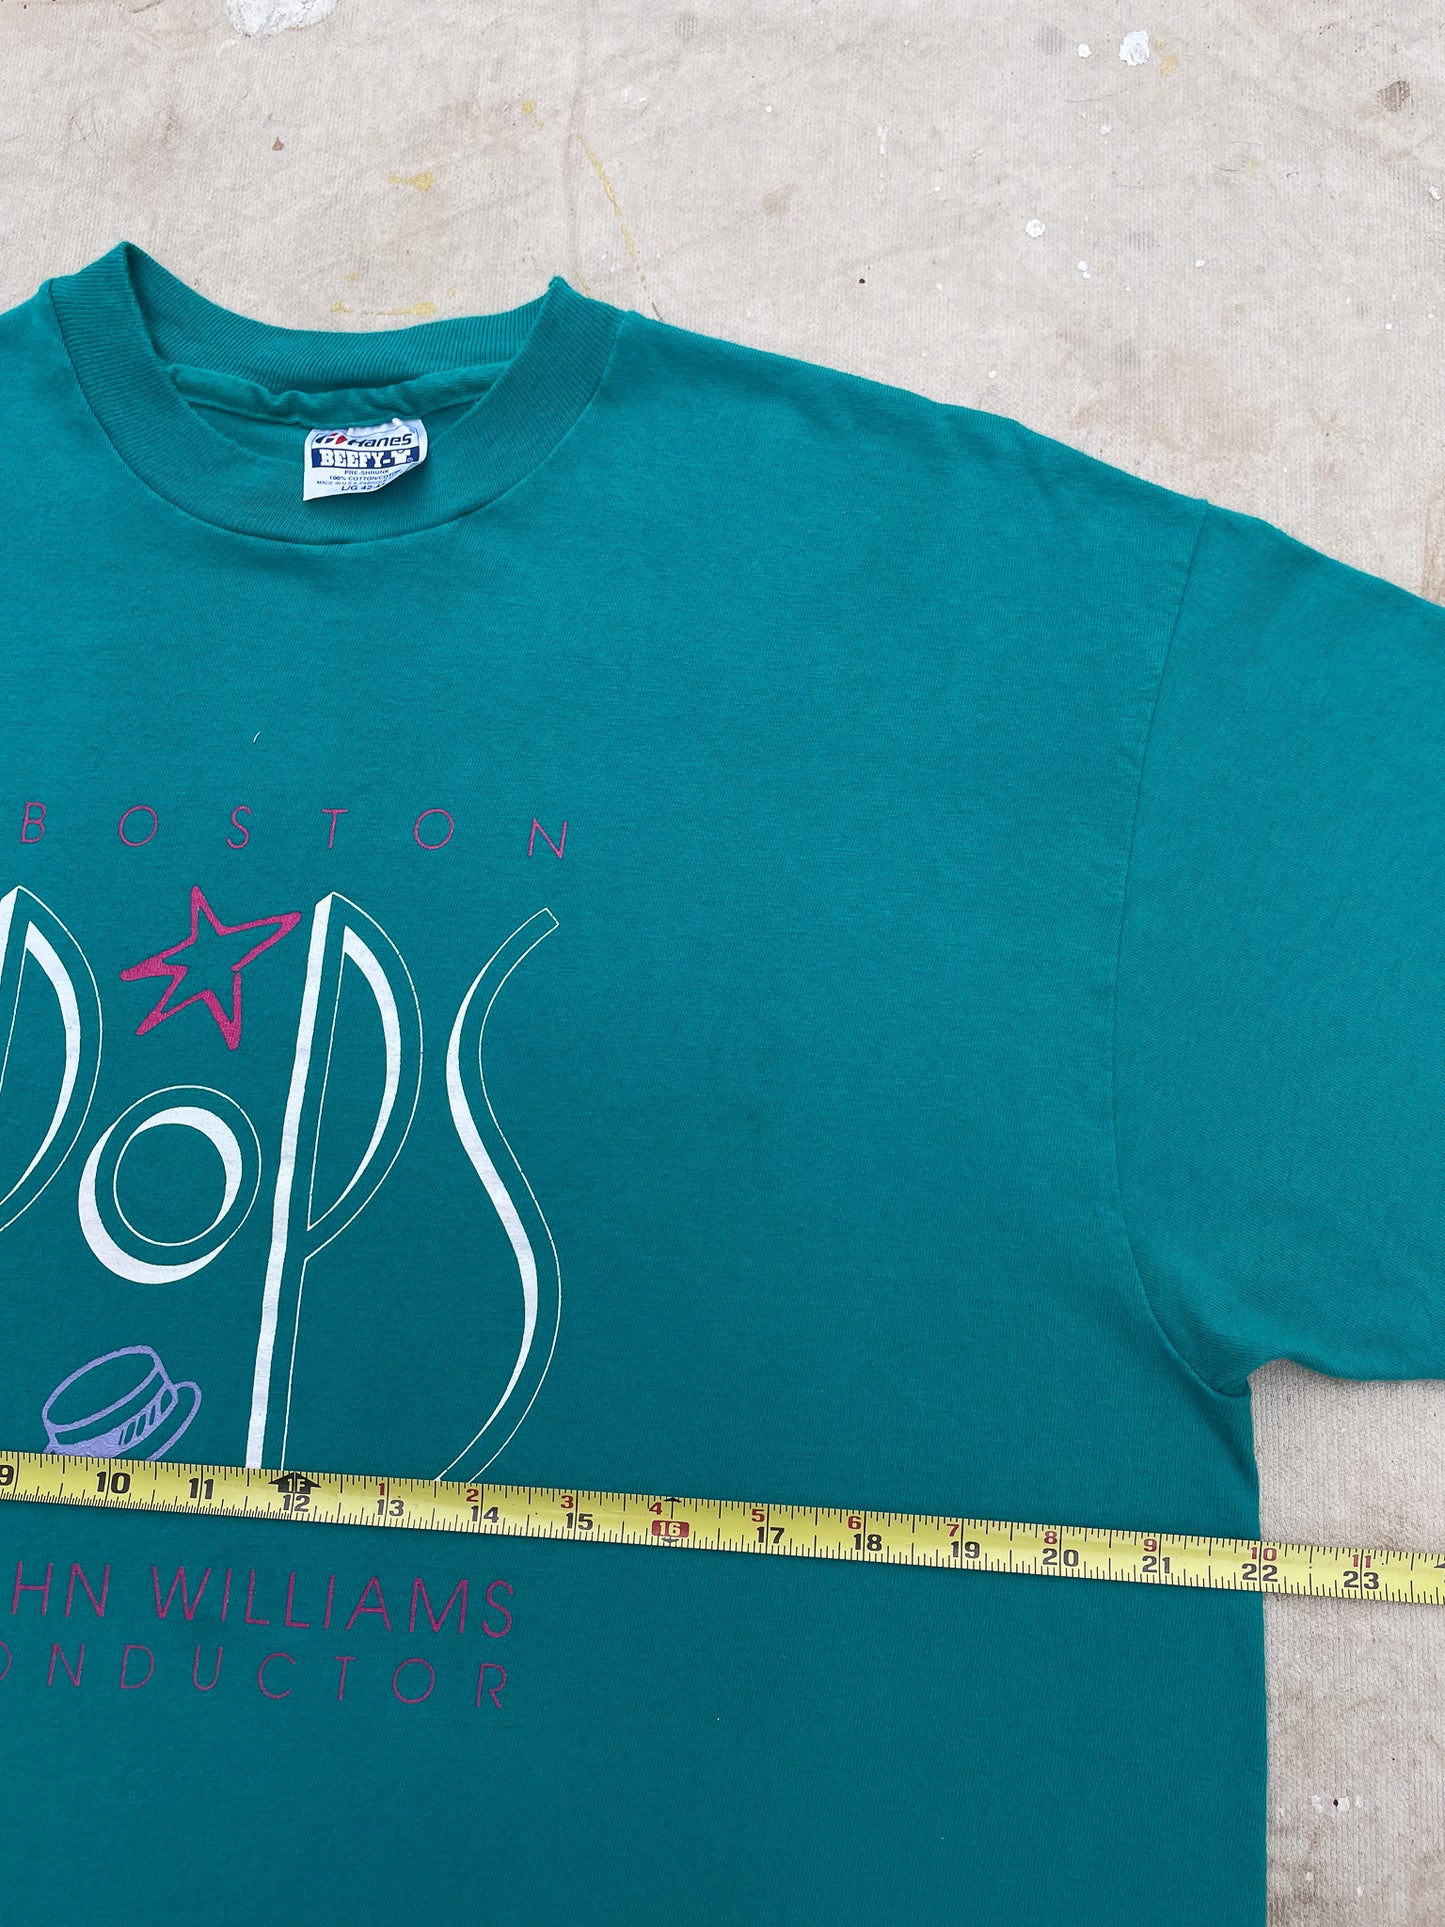 Boston Pops T-Shirt—[L]